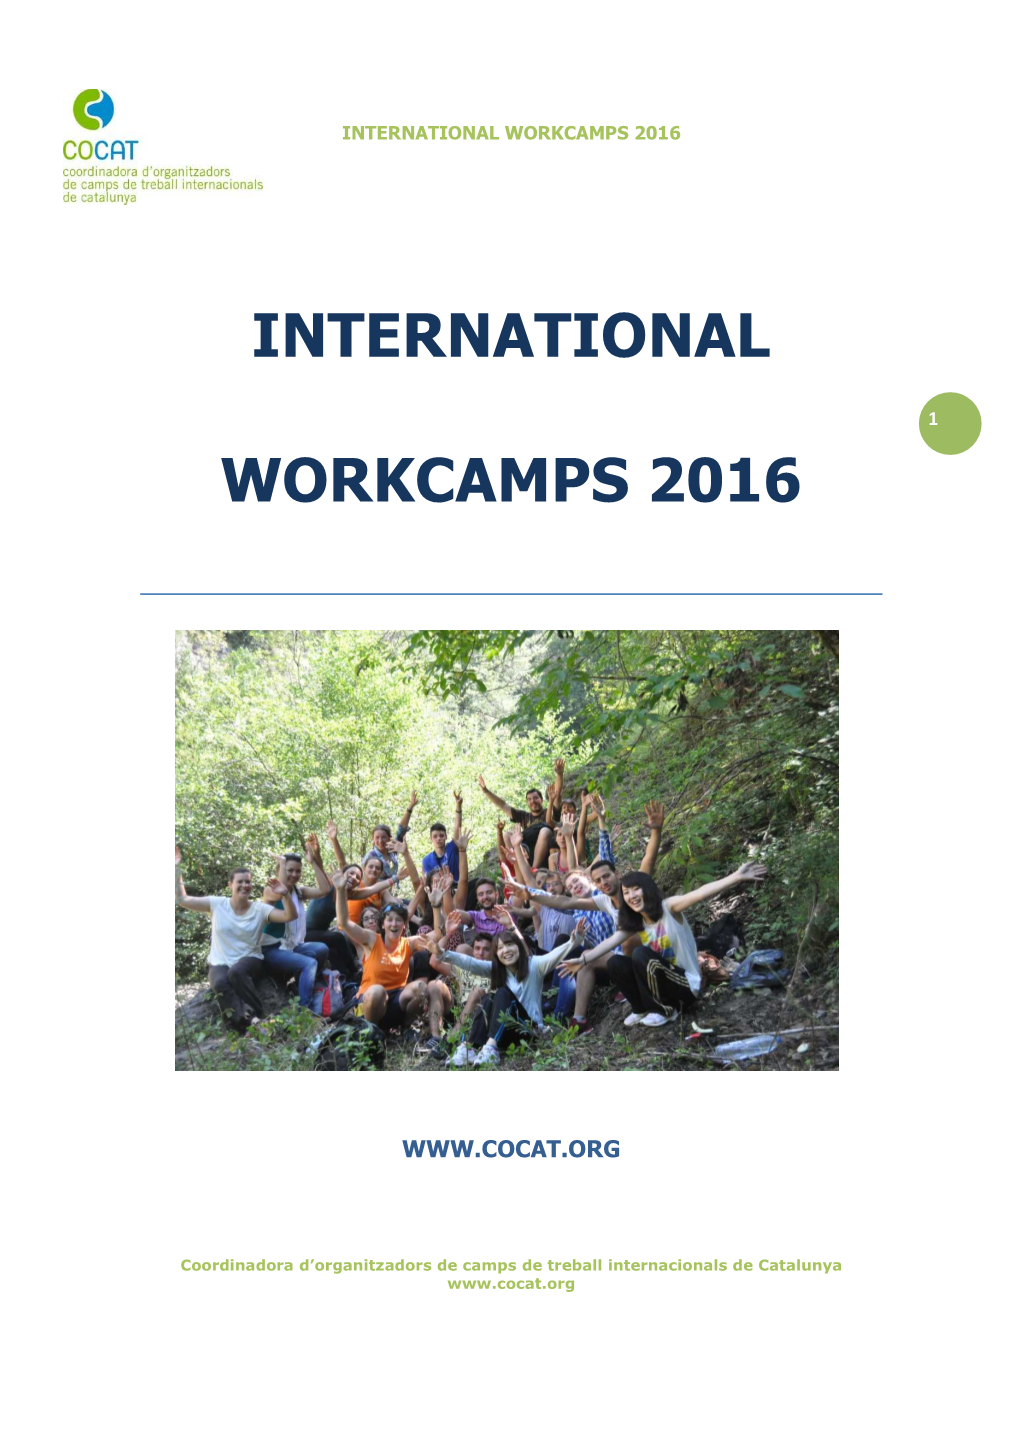 COCAT Workcamps2016 UPDATED2